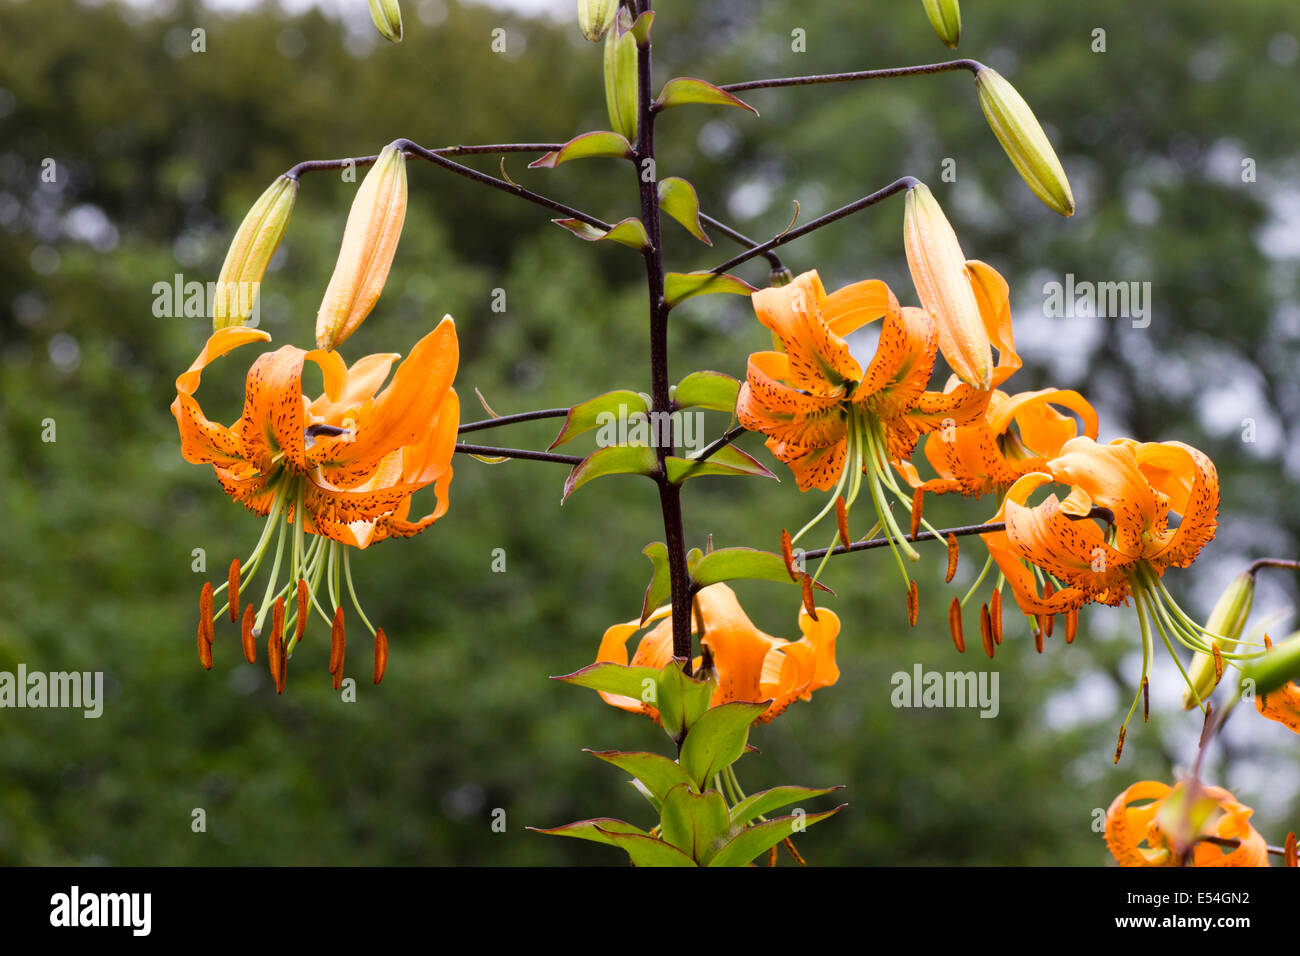 Reflexed, turkscap petals in the flowers of Lilium henryi Stock Photo